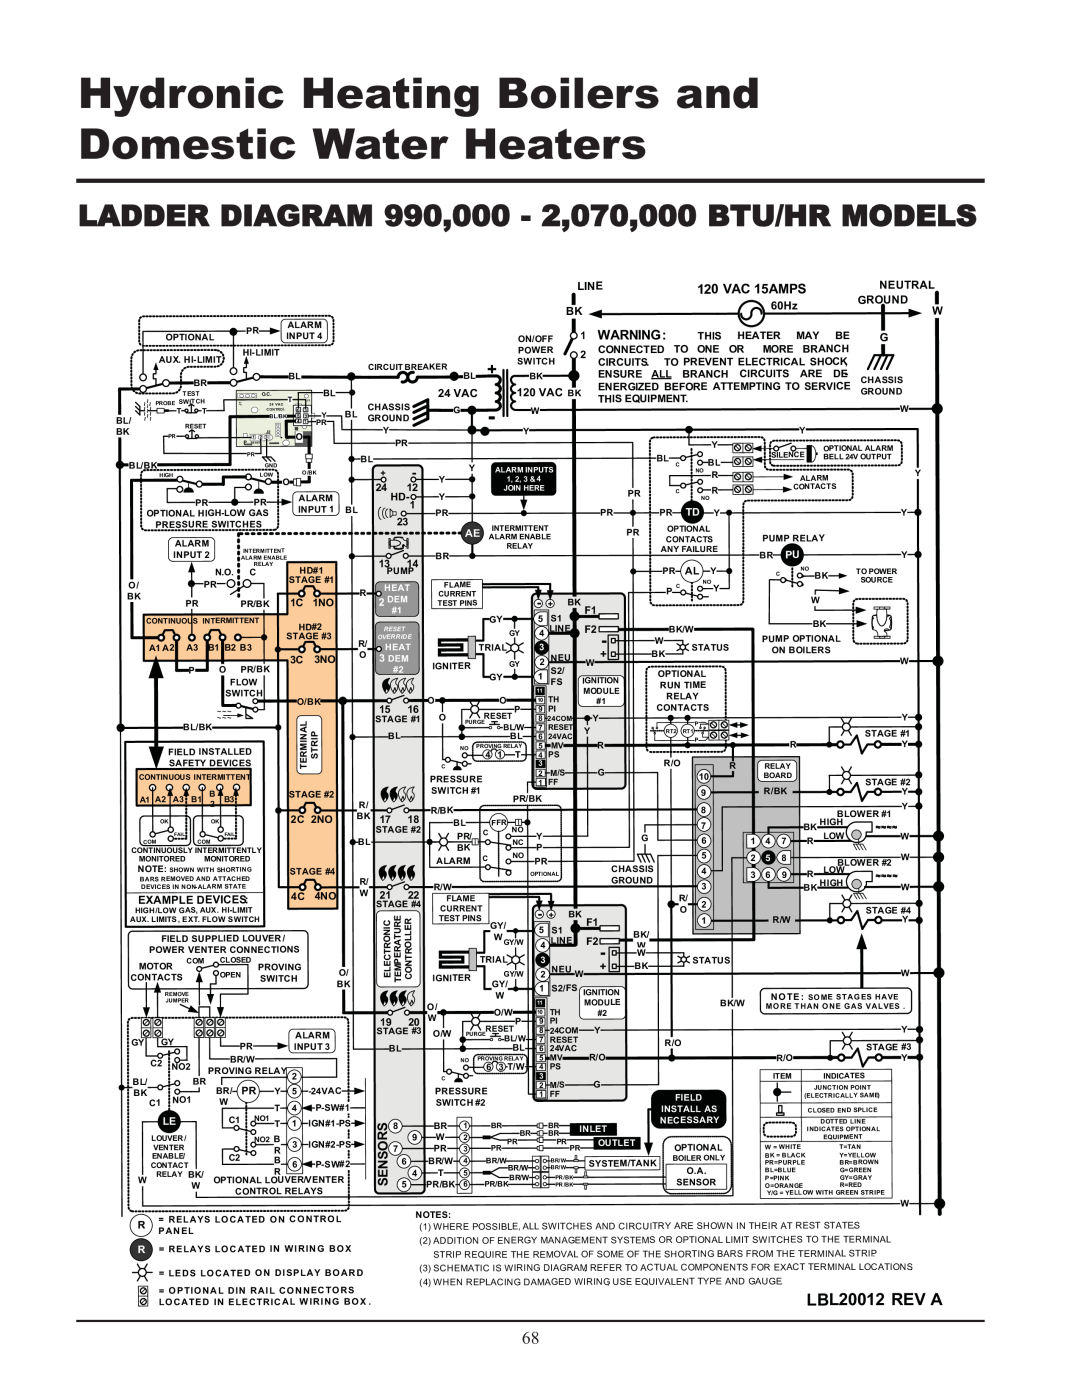 Lochinvar 399 LADDER DIAGRAM 990,000 - 2,070,000 BTU/HR MODELS, LBL20012 REV A, VAC 15AMPS, Line, Neutral, 120 VAC, 24 VAC 